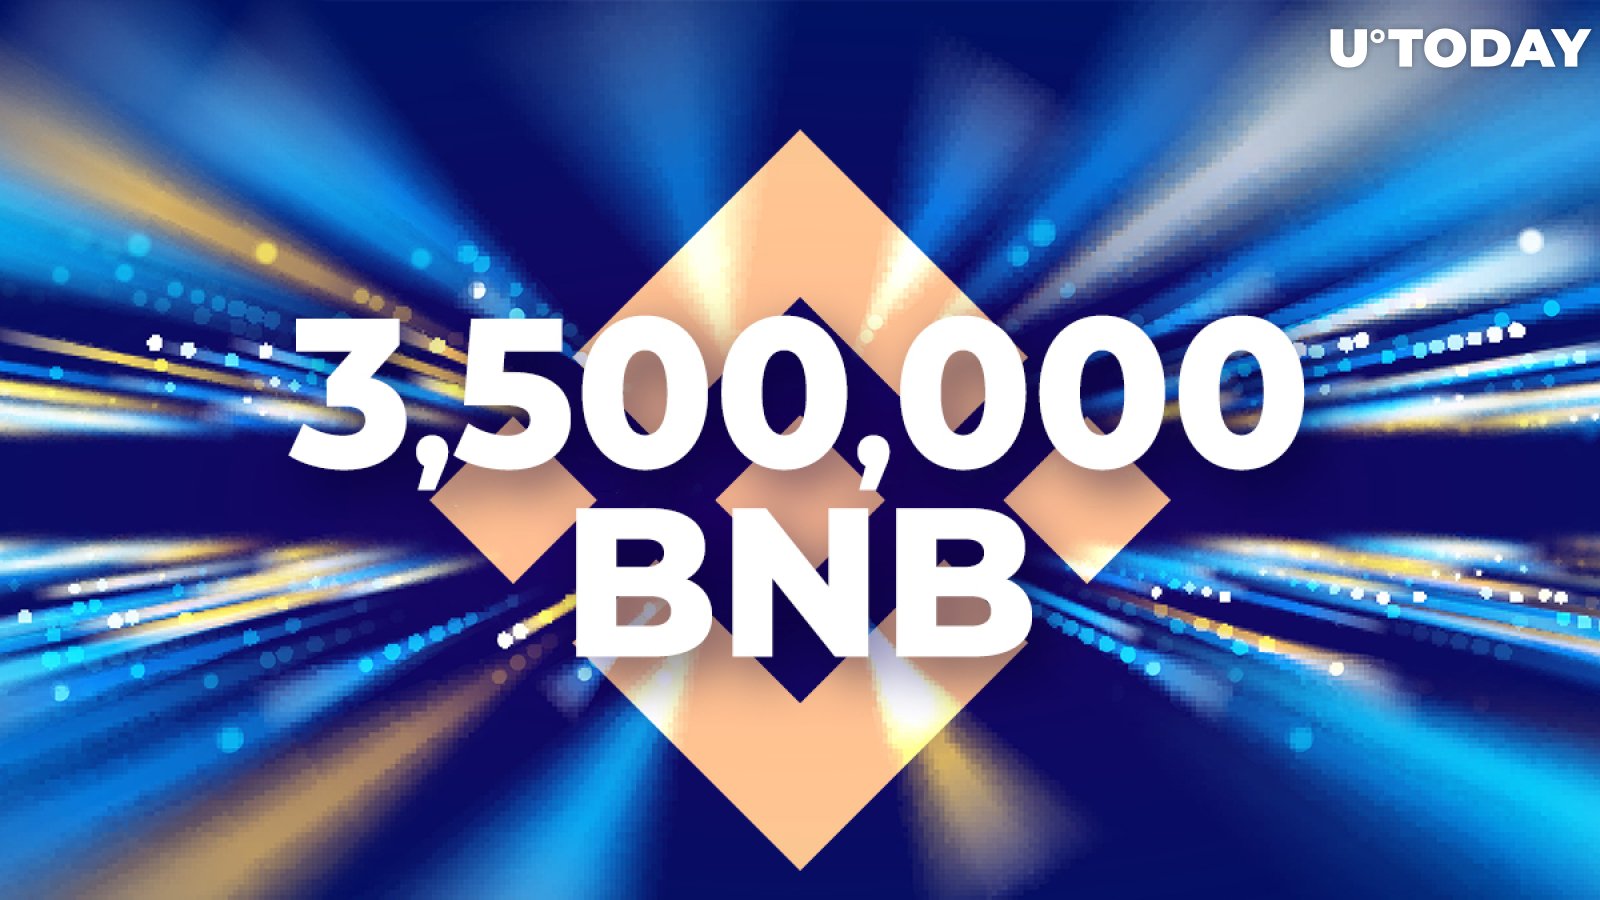 Binance Transfers Approx 3,500,000 BNB While Binance Coin Rises 15%